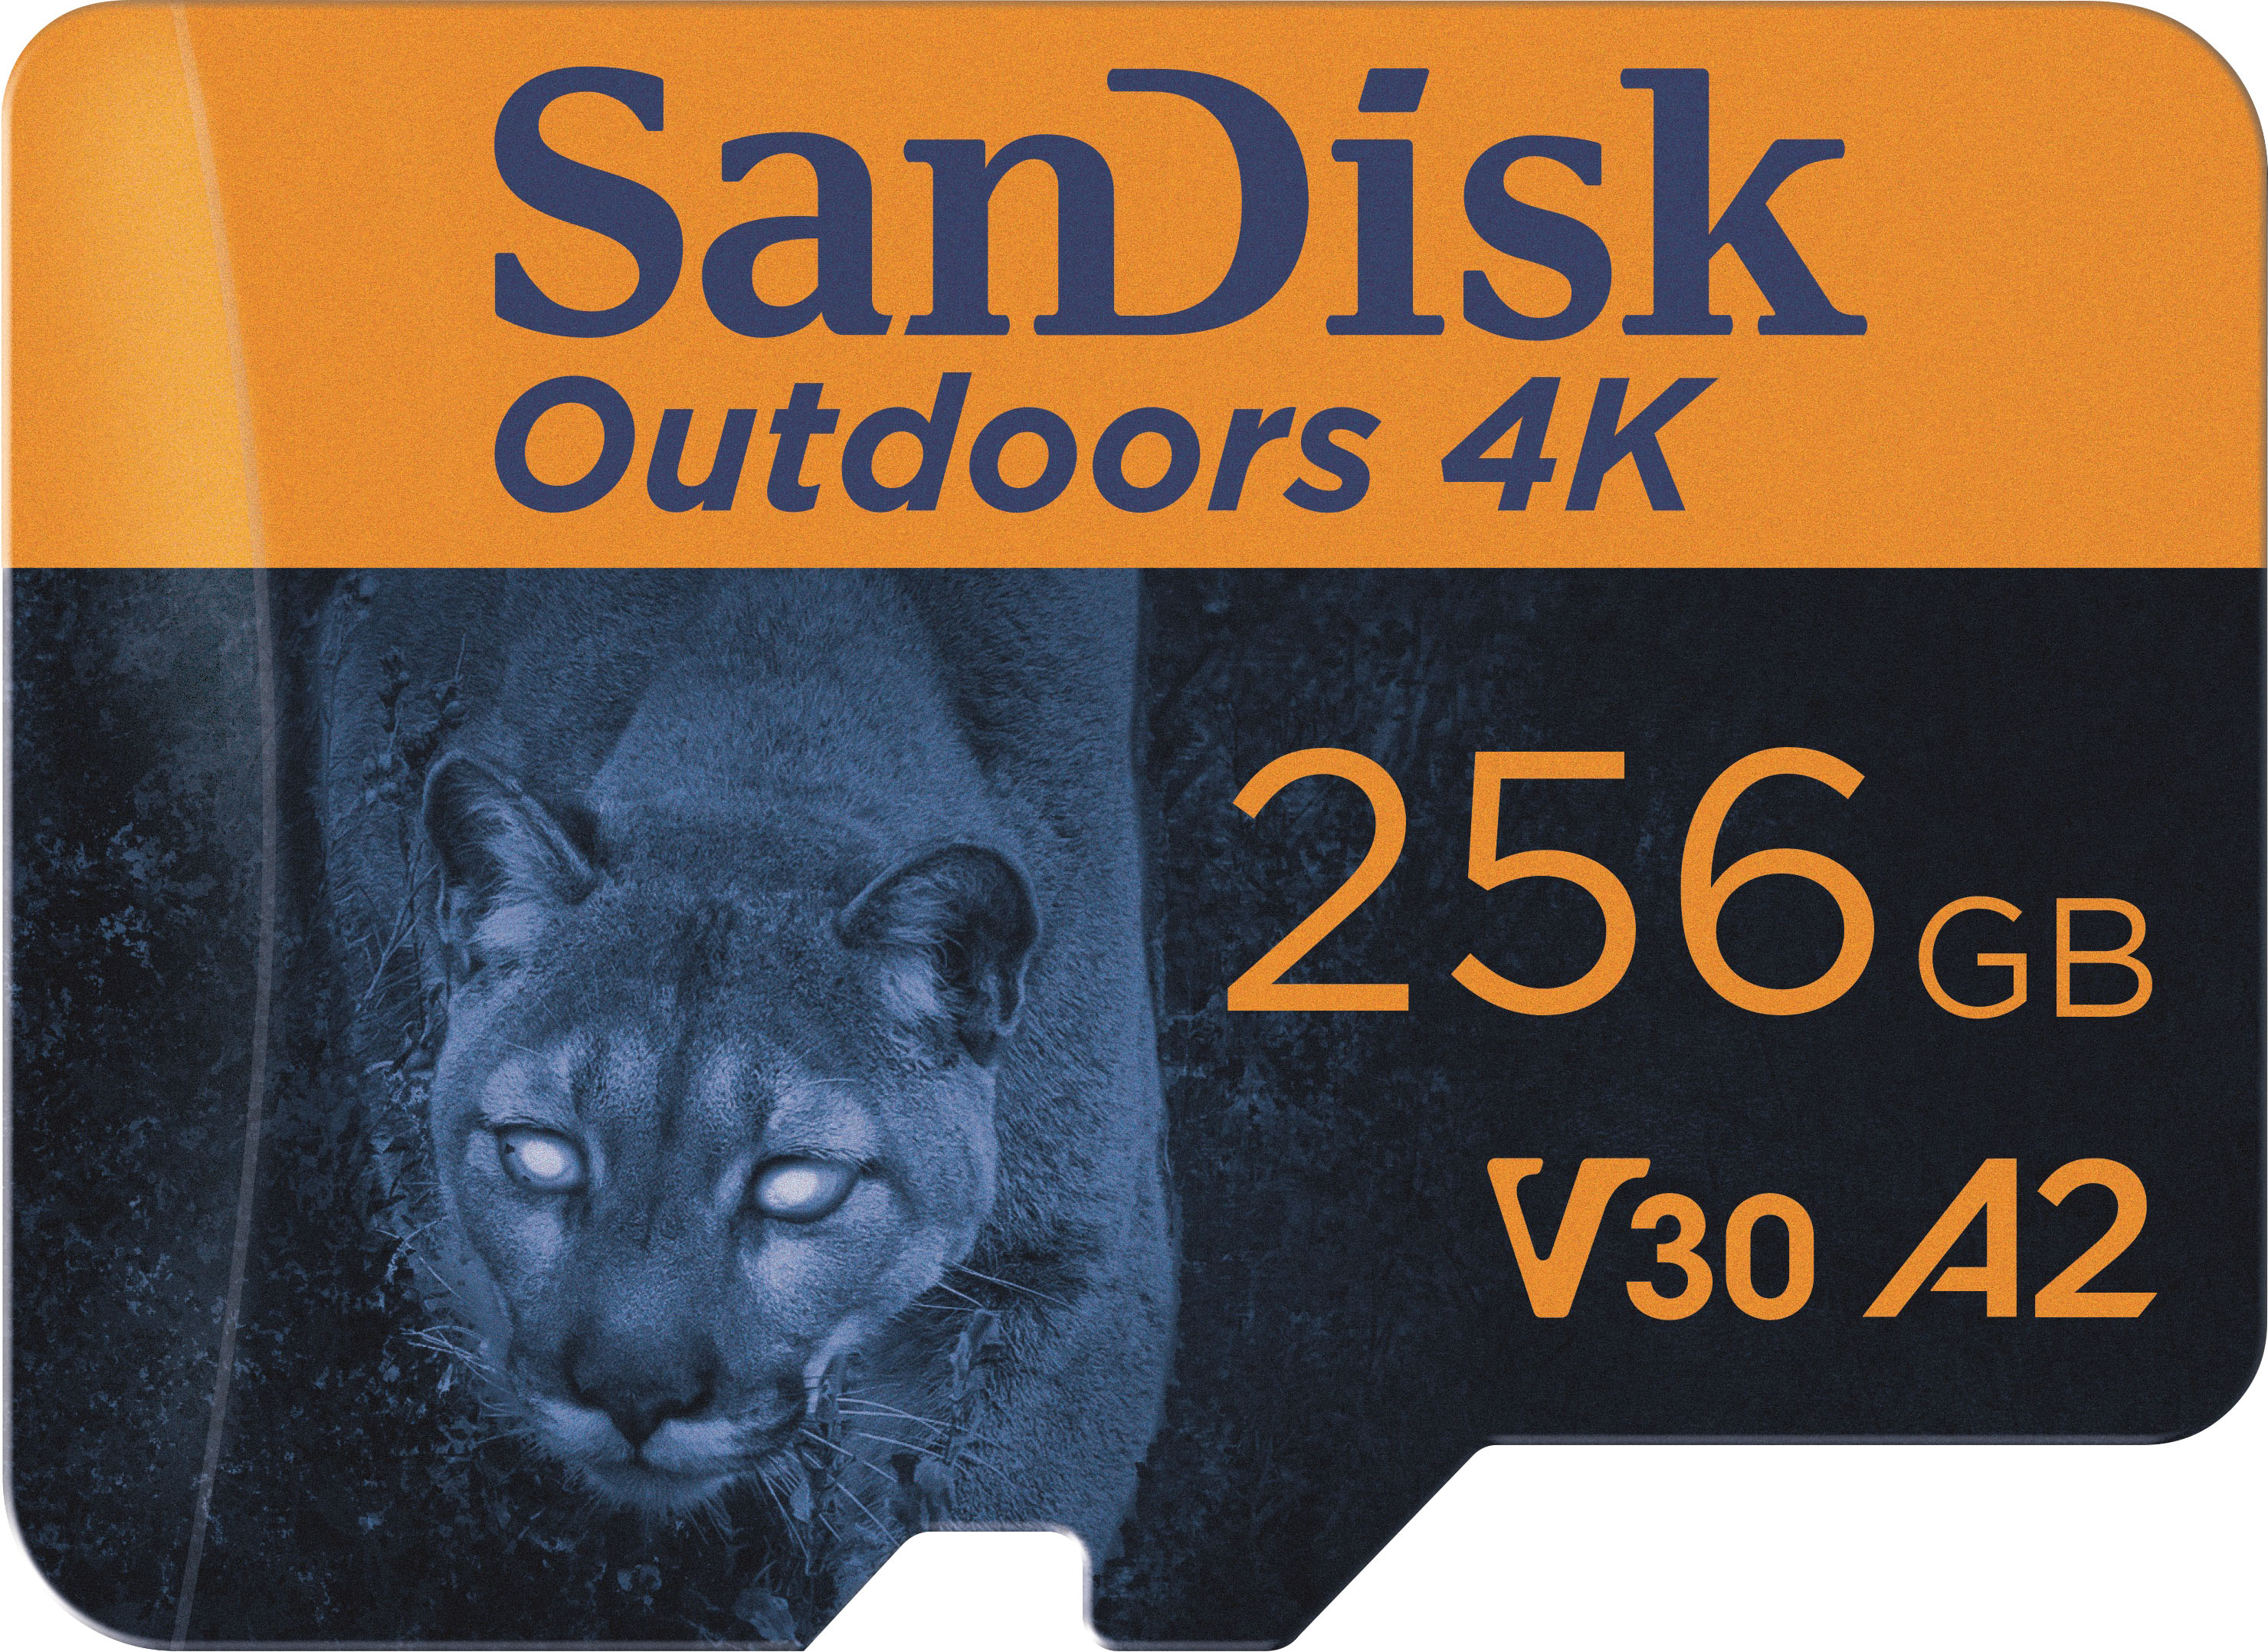 SanDisk Extreme Pro Memory Card MicroSDXC UHS-I U3 A2 V30 128GB